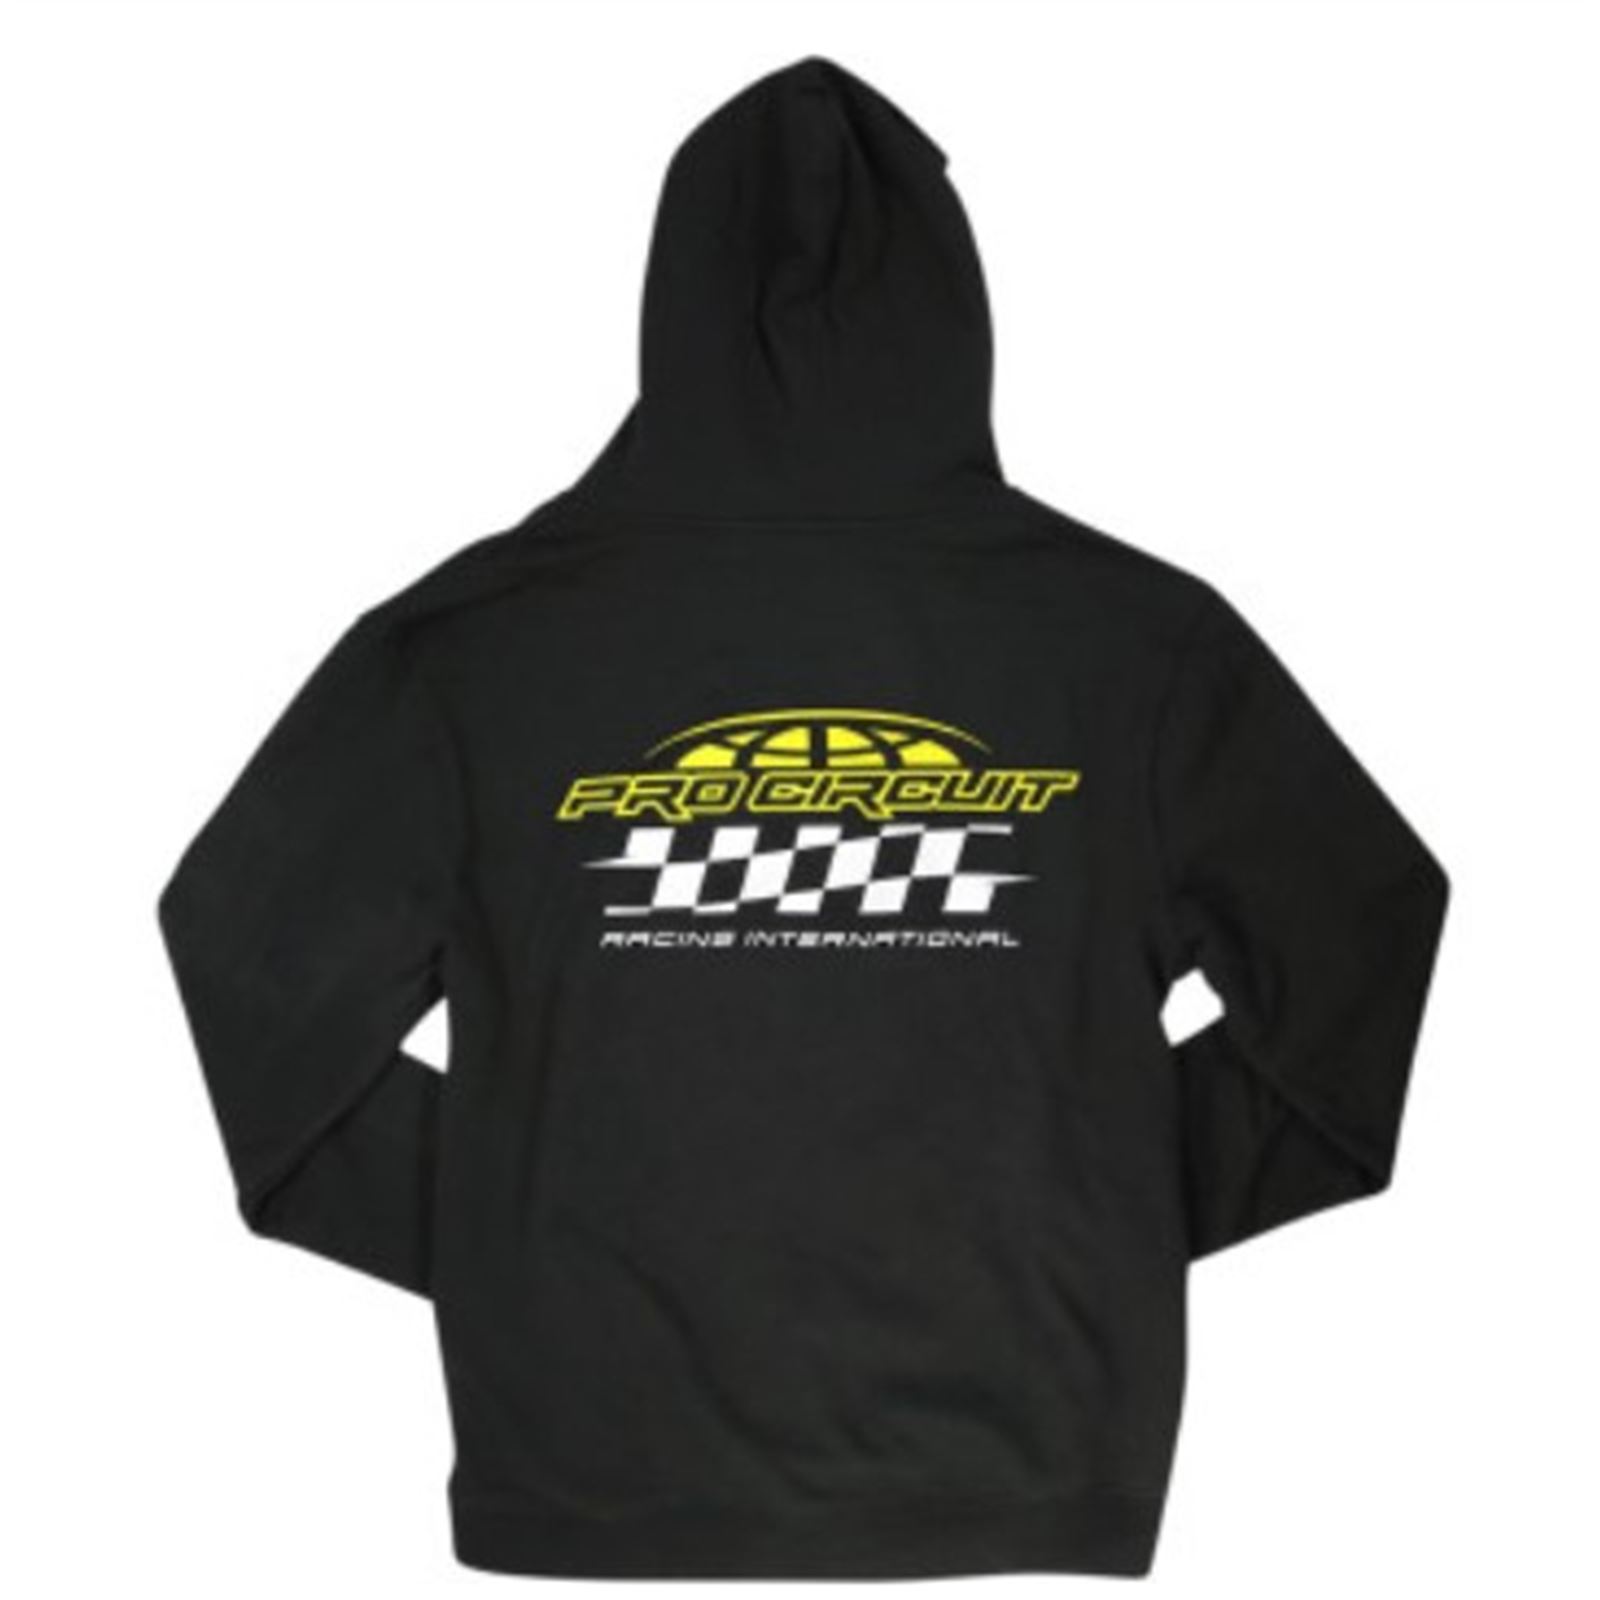 Pro Circuit Racer Zip Hoodie - Black - X-Large